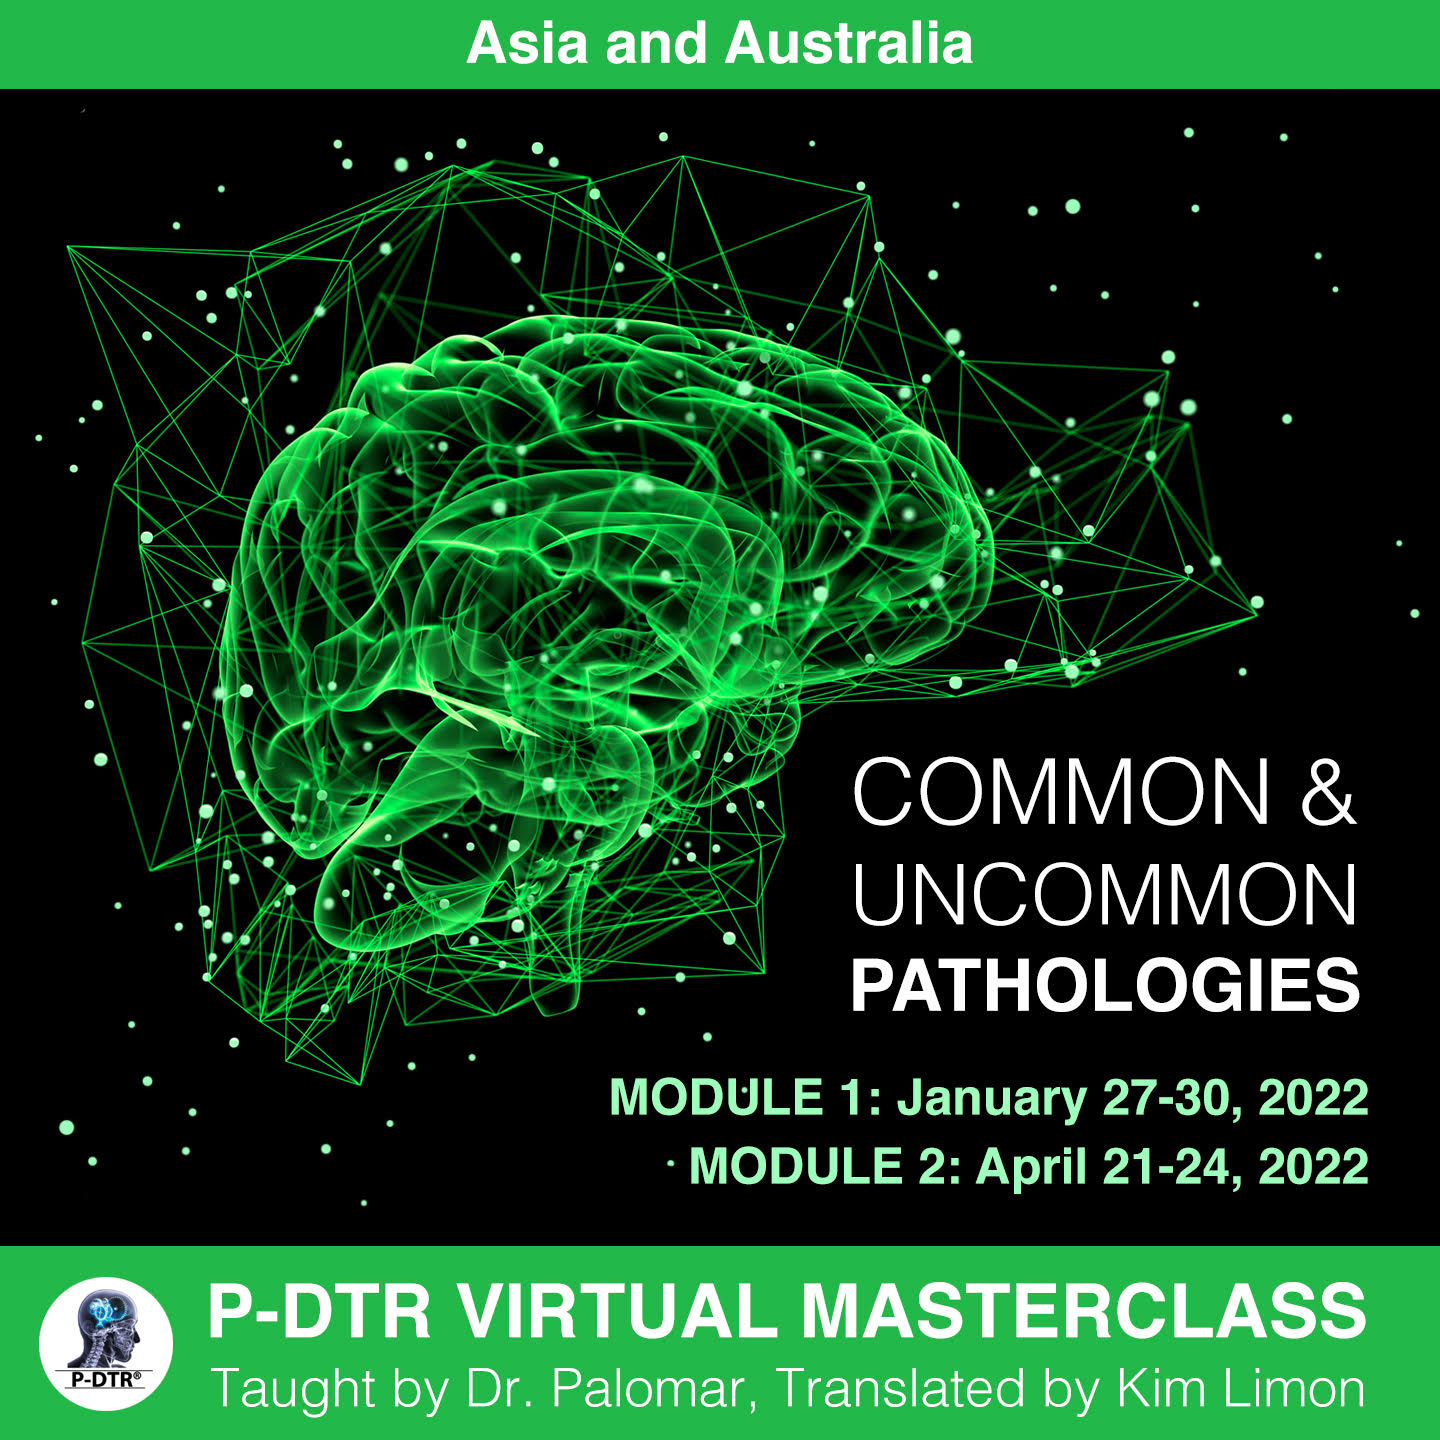 P-DTR Masterclass - P-DTR Common and Uncommon Pathologies, Asia and Australia